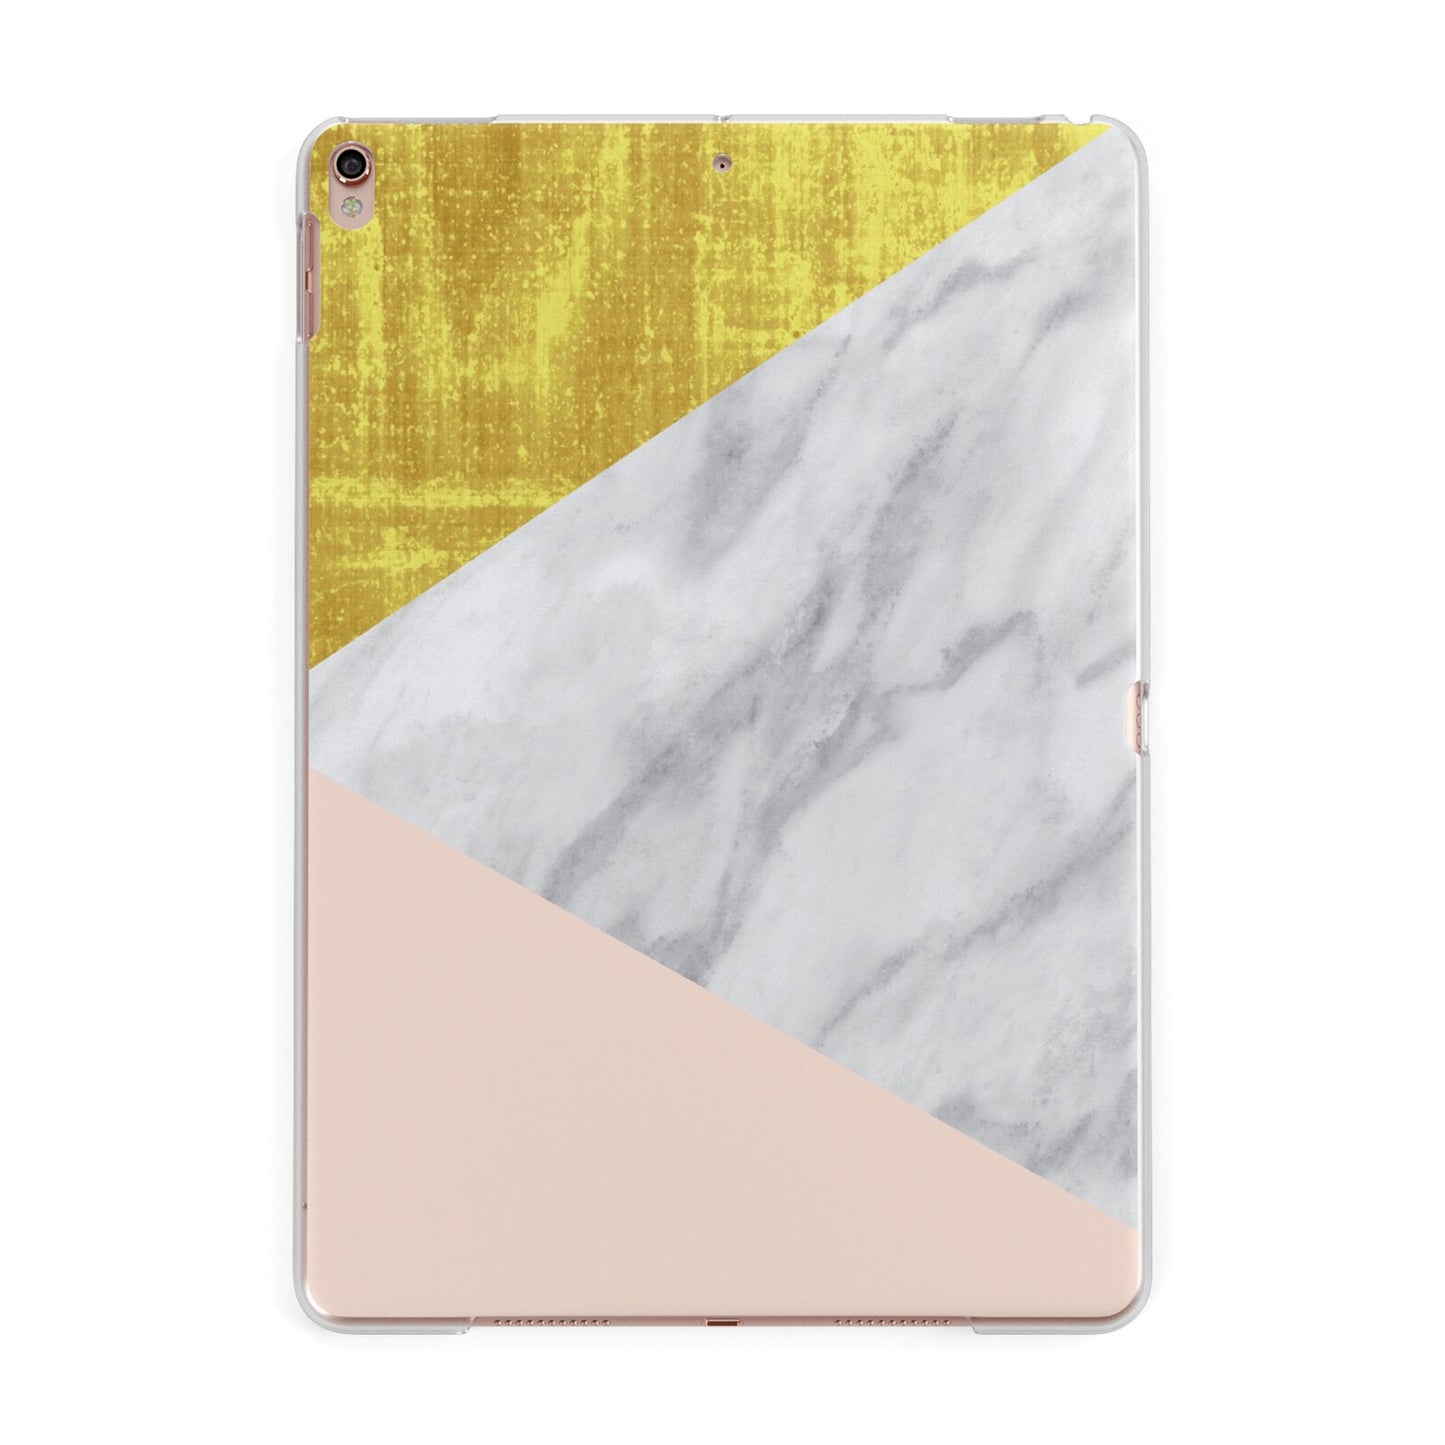 Marble White Gold Foil Peach Apple iPad Rose Gold Case